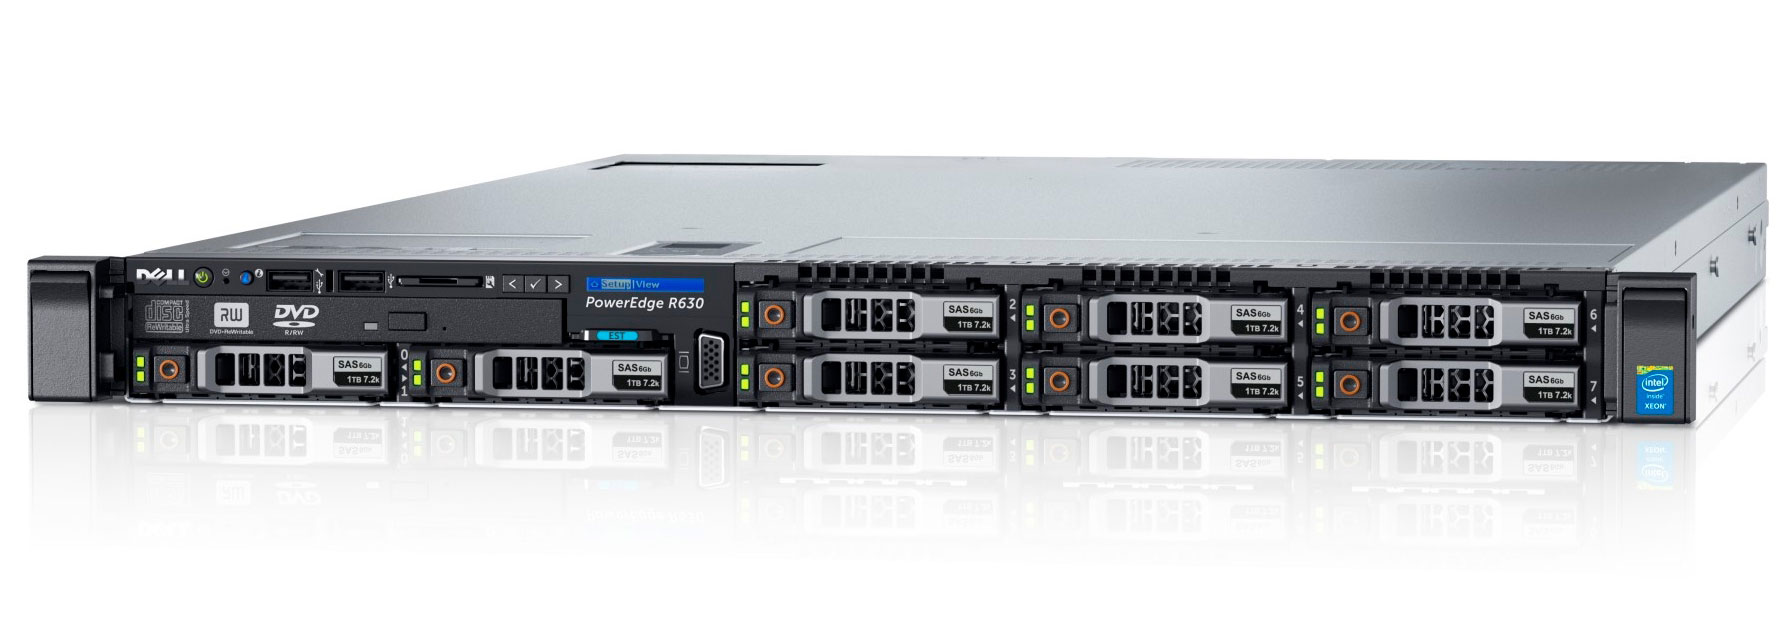 Подробное фото Сервер DELL PowerEdge R630 Xeon 2x E5-2697Av4 256Gb 2133P DDR4 8x noHDD 2.5", SAS RAID Perc H730, 1024Mb, DVD, 2*PSU